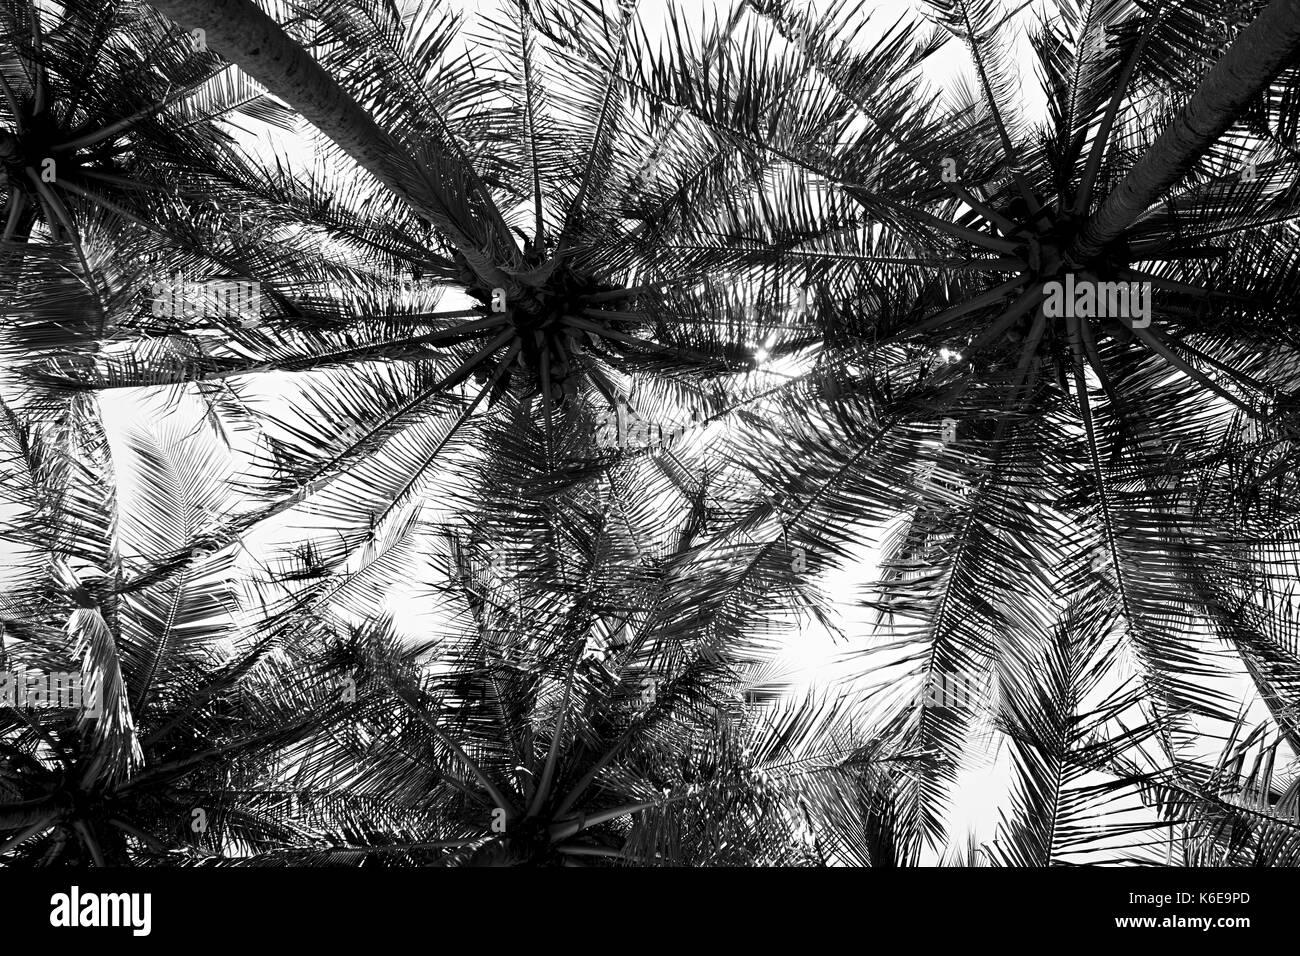 Palm trees along the beach in Samara, Costa Rica Stock Photo